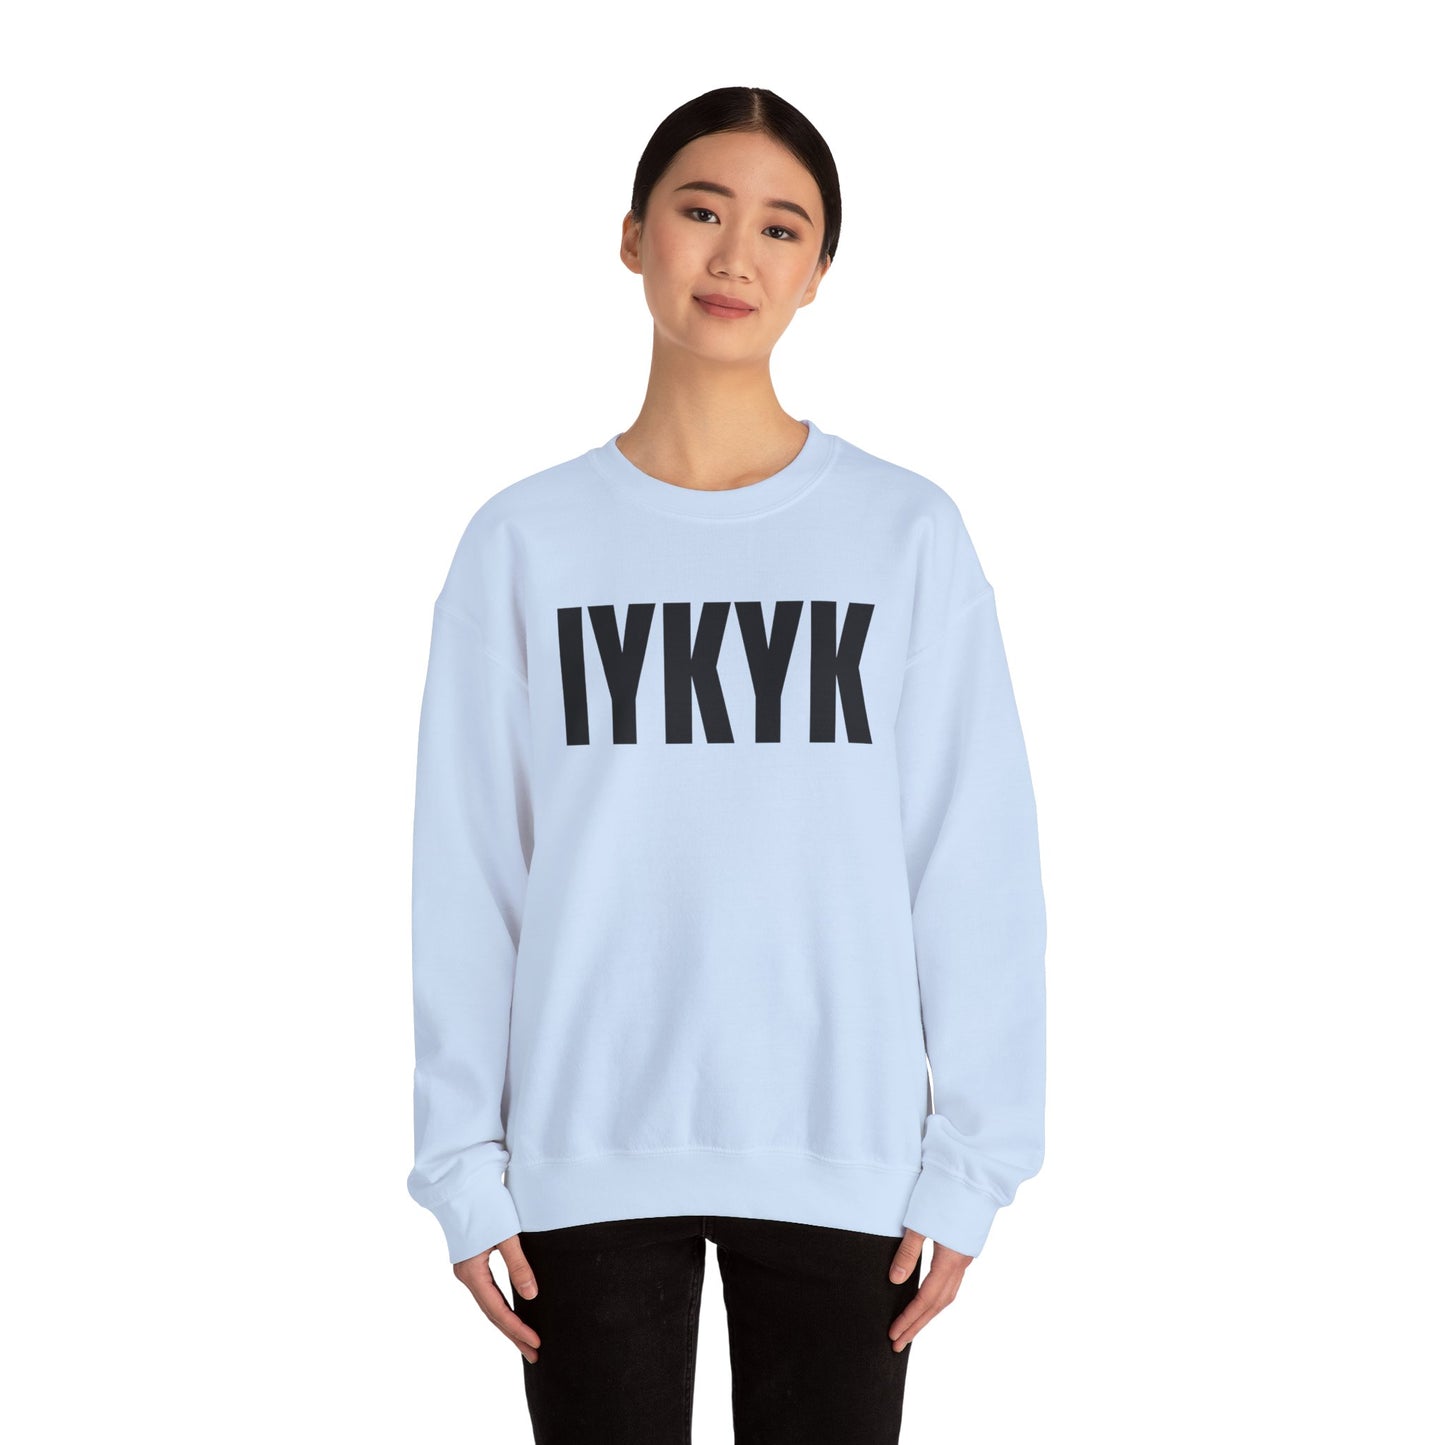 IYKYK Unisex Heavy Blend Crewneck Sweatshirt: Comfort, Style, and Ethical Craftsmanship